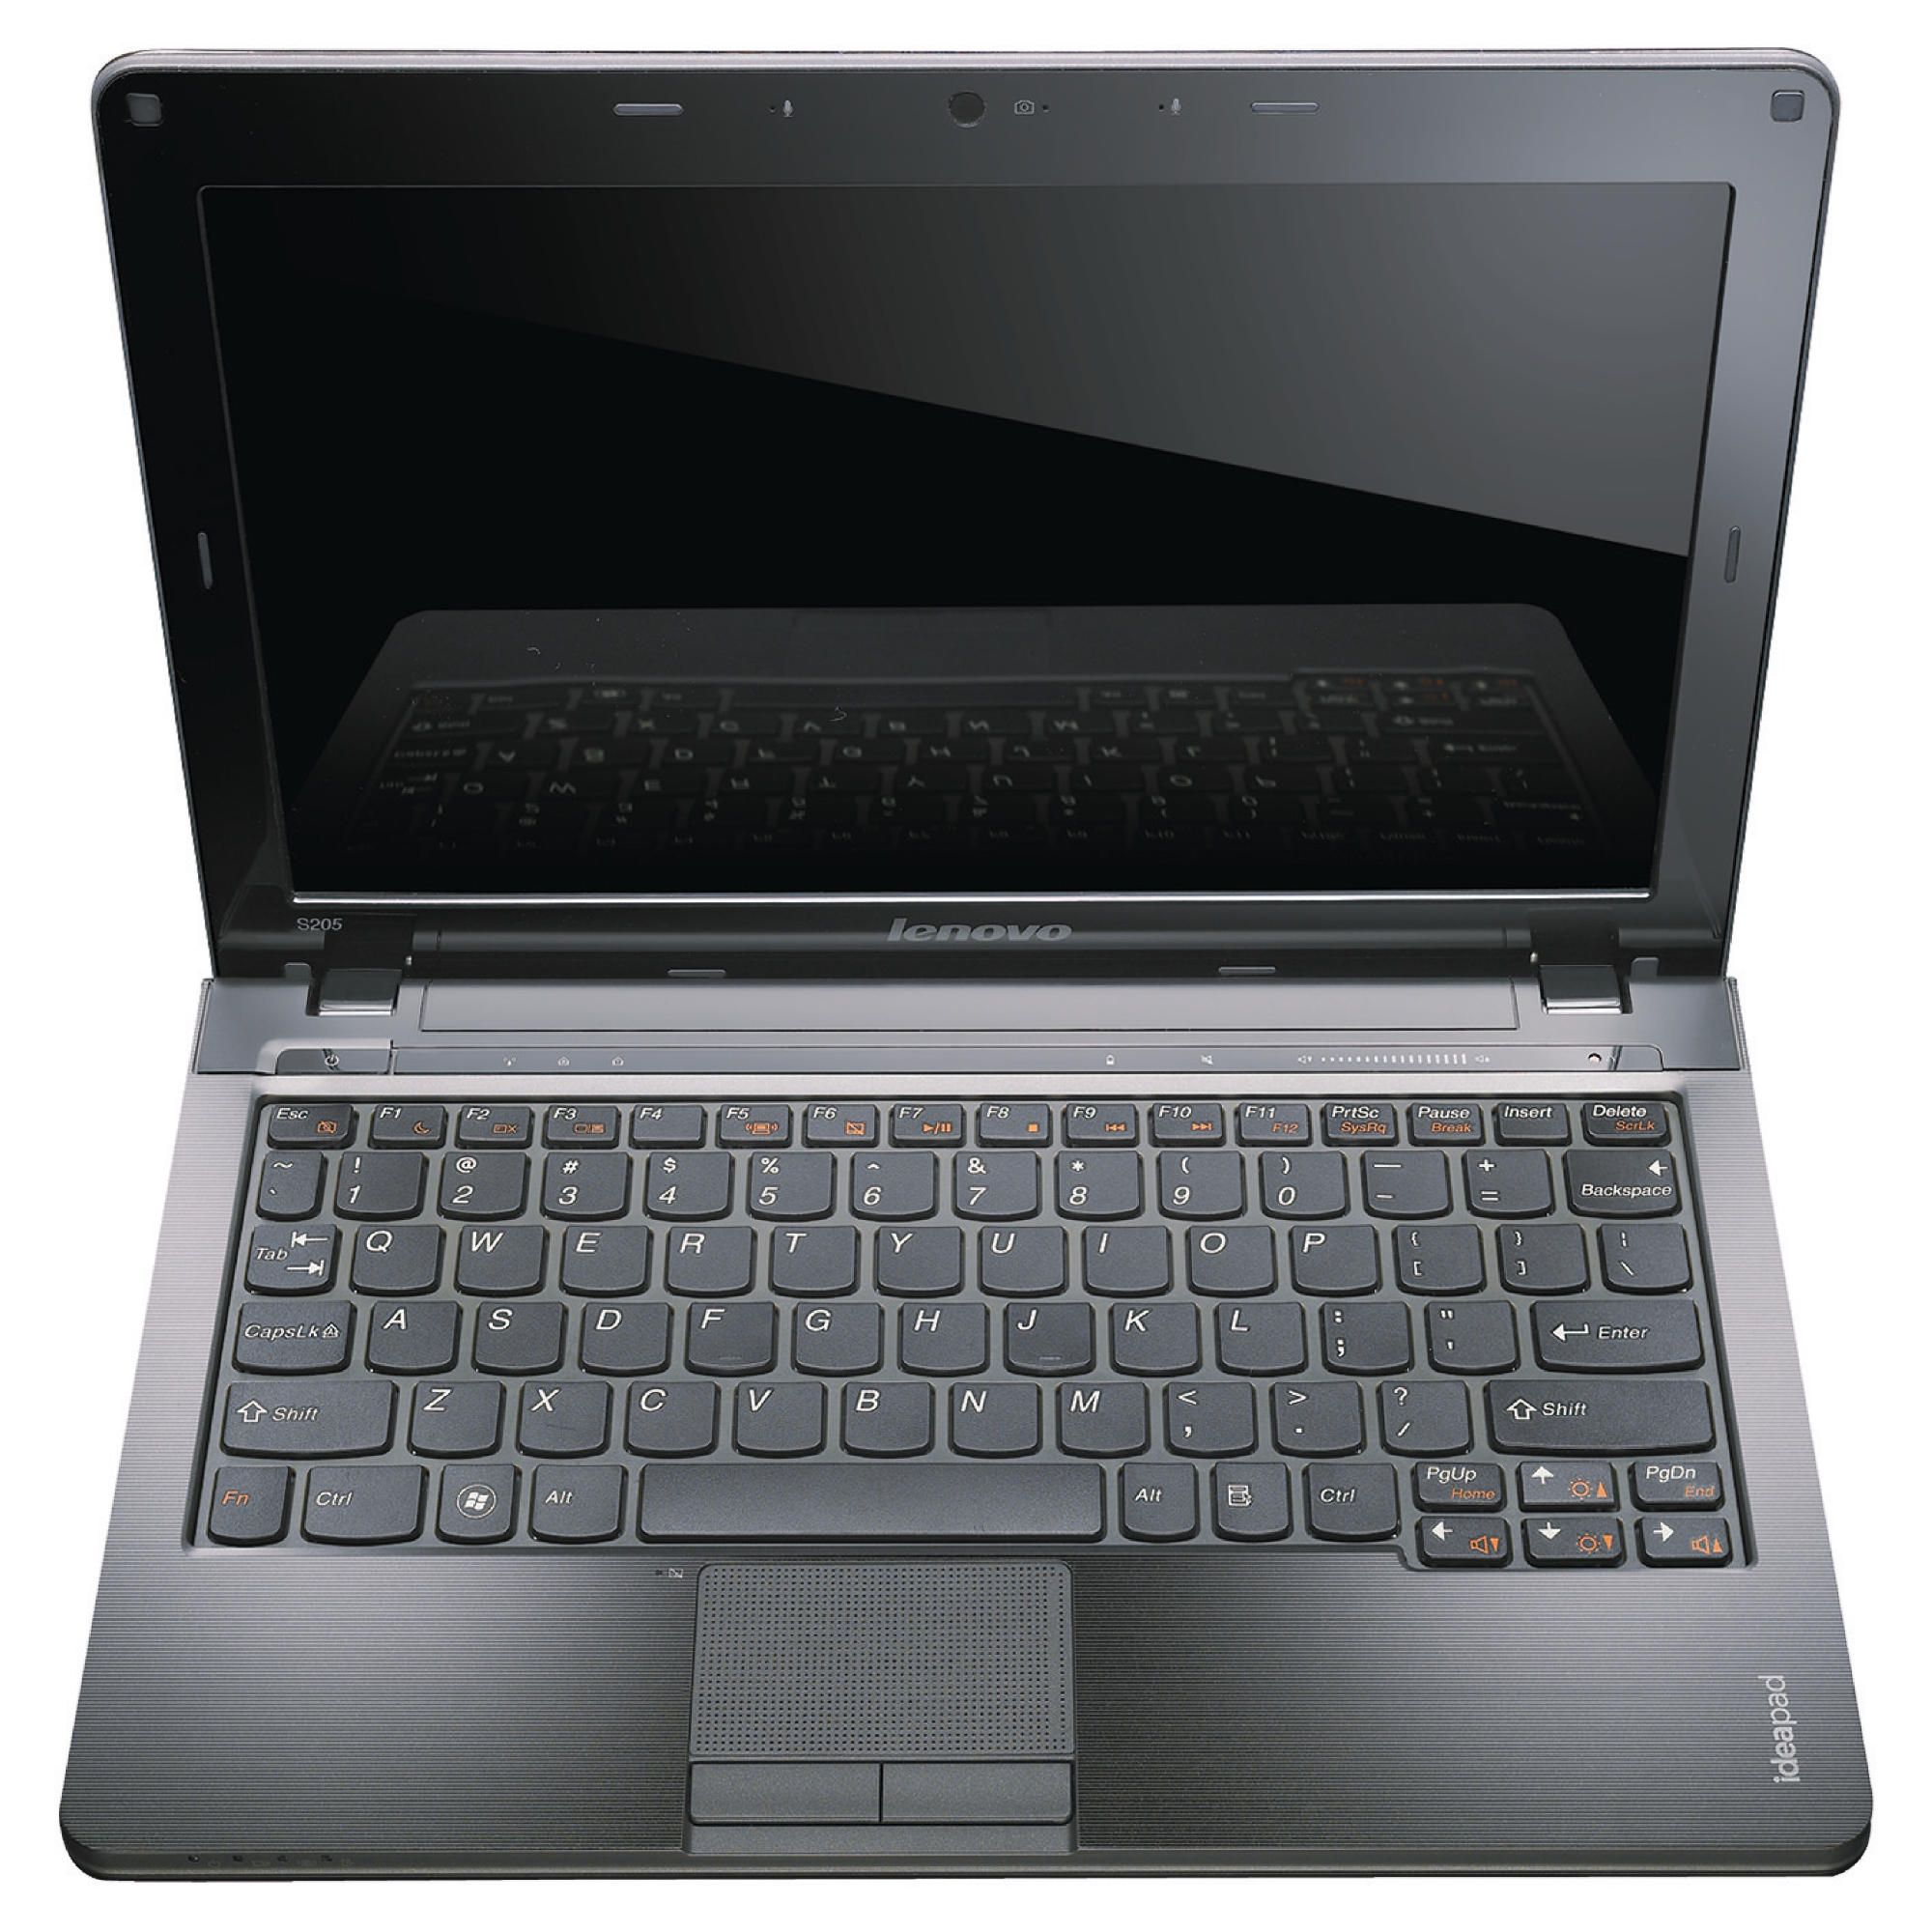 Lenovo S205 Netbook (AMD E350, 2GB, 320GB, 11.6'' Display) Black at Tesco Direct